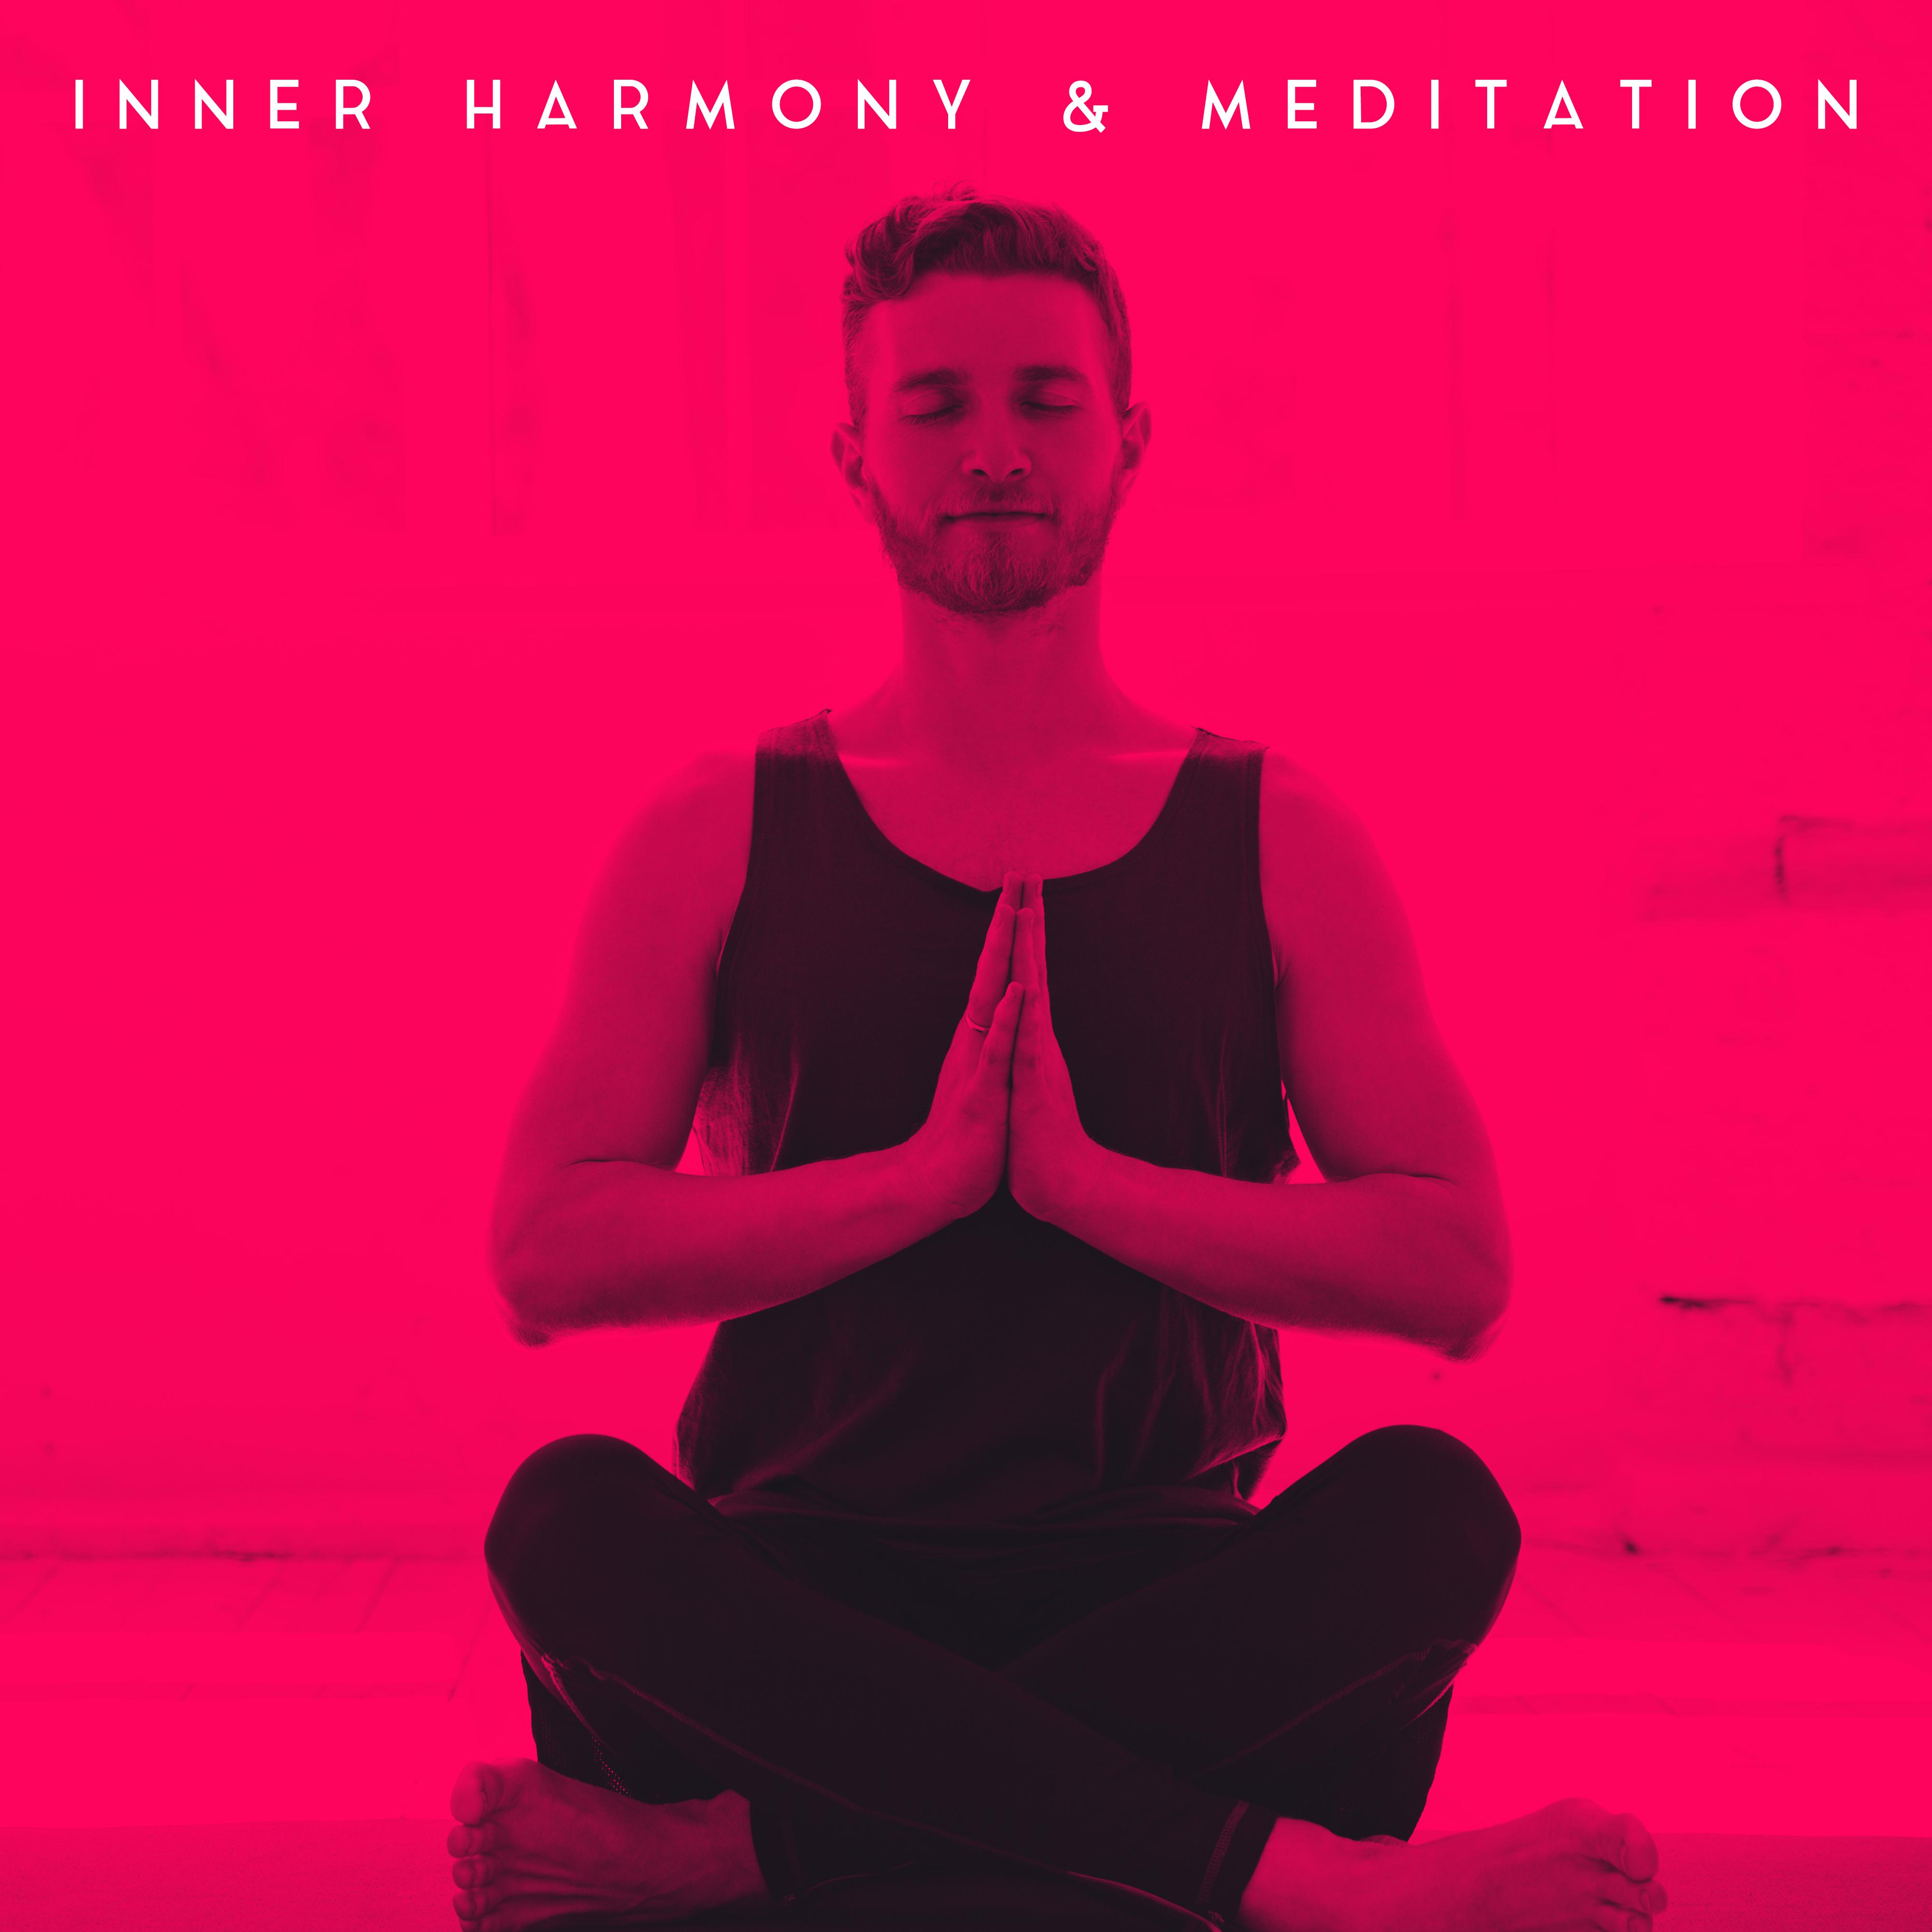 Inner Harmony & Meditation: Meditation Music Zone, Zen, Lounge, Spiritual Music, Relief Music, Yoga Training